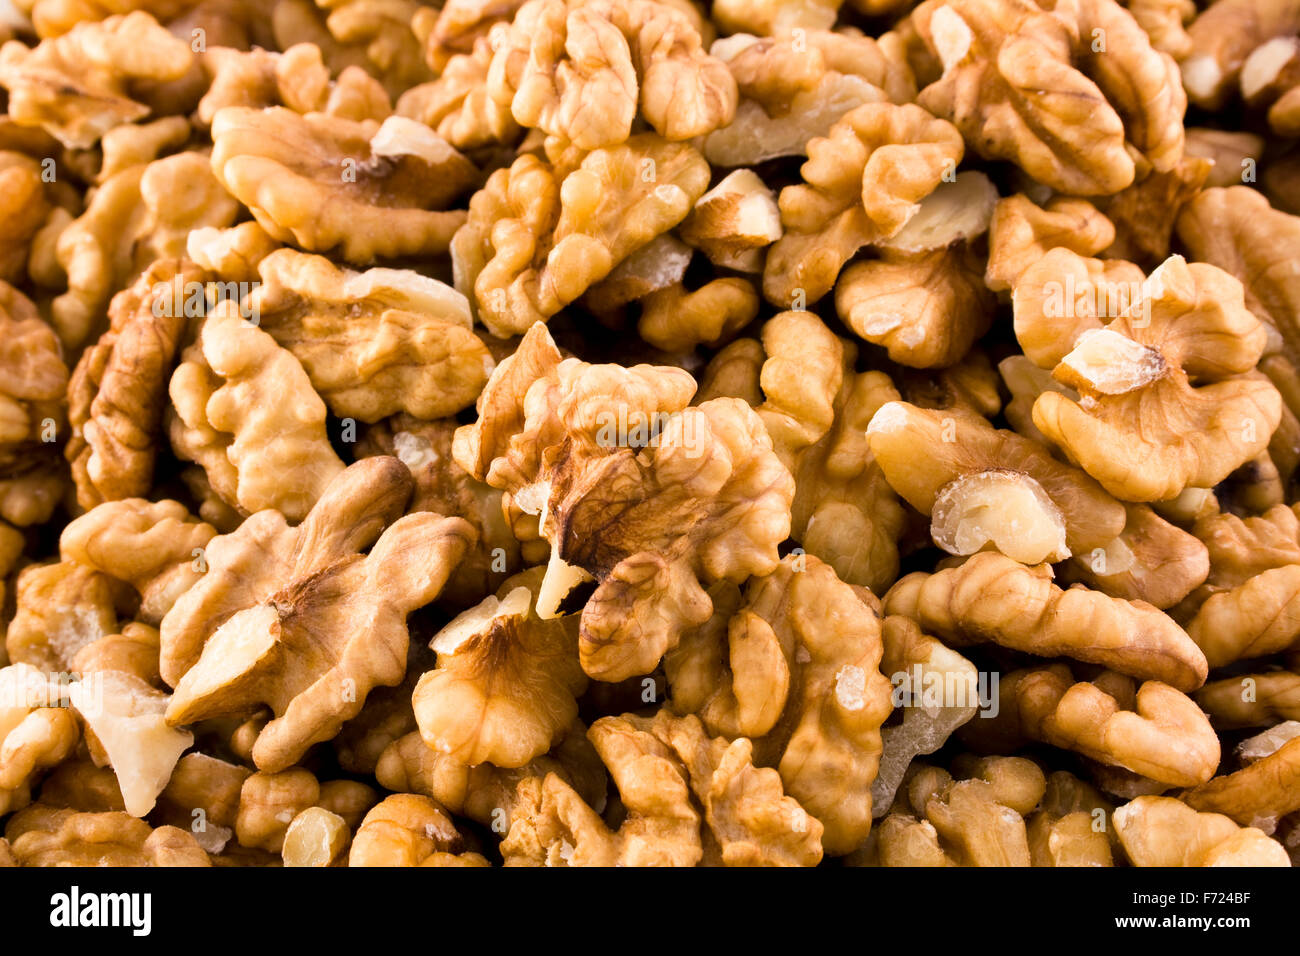 Close up image of walnuts Stock Photo